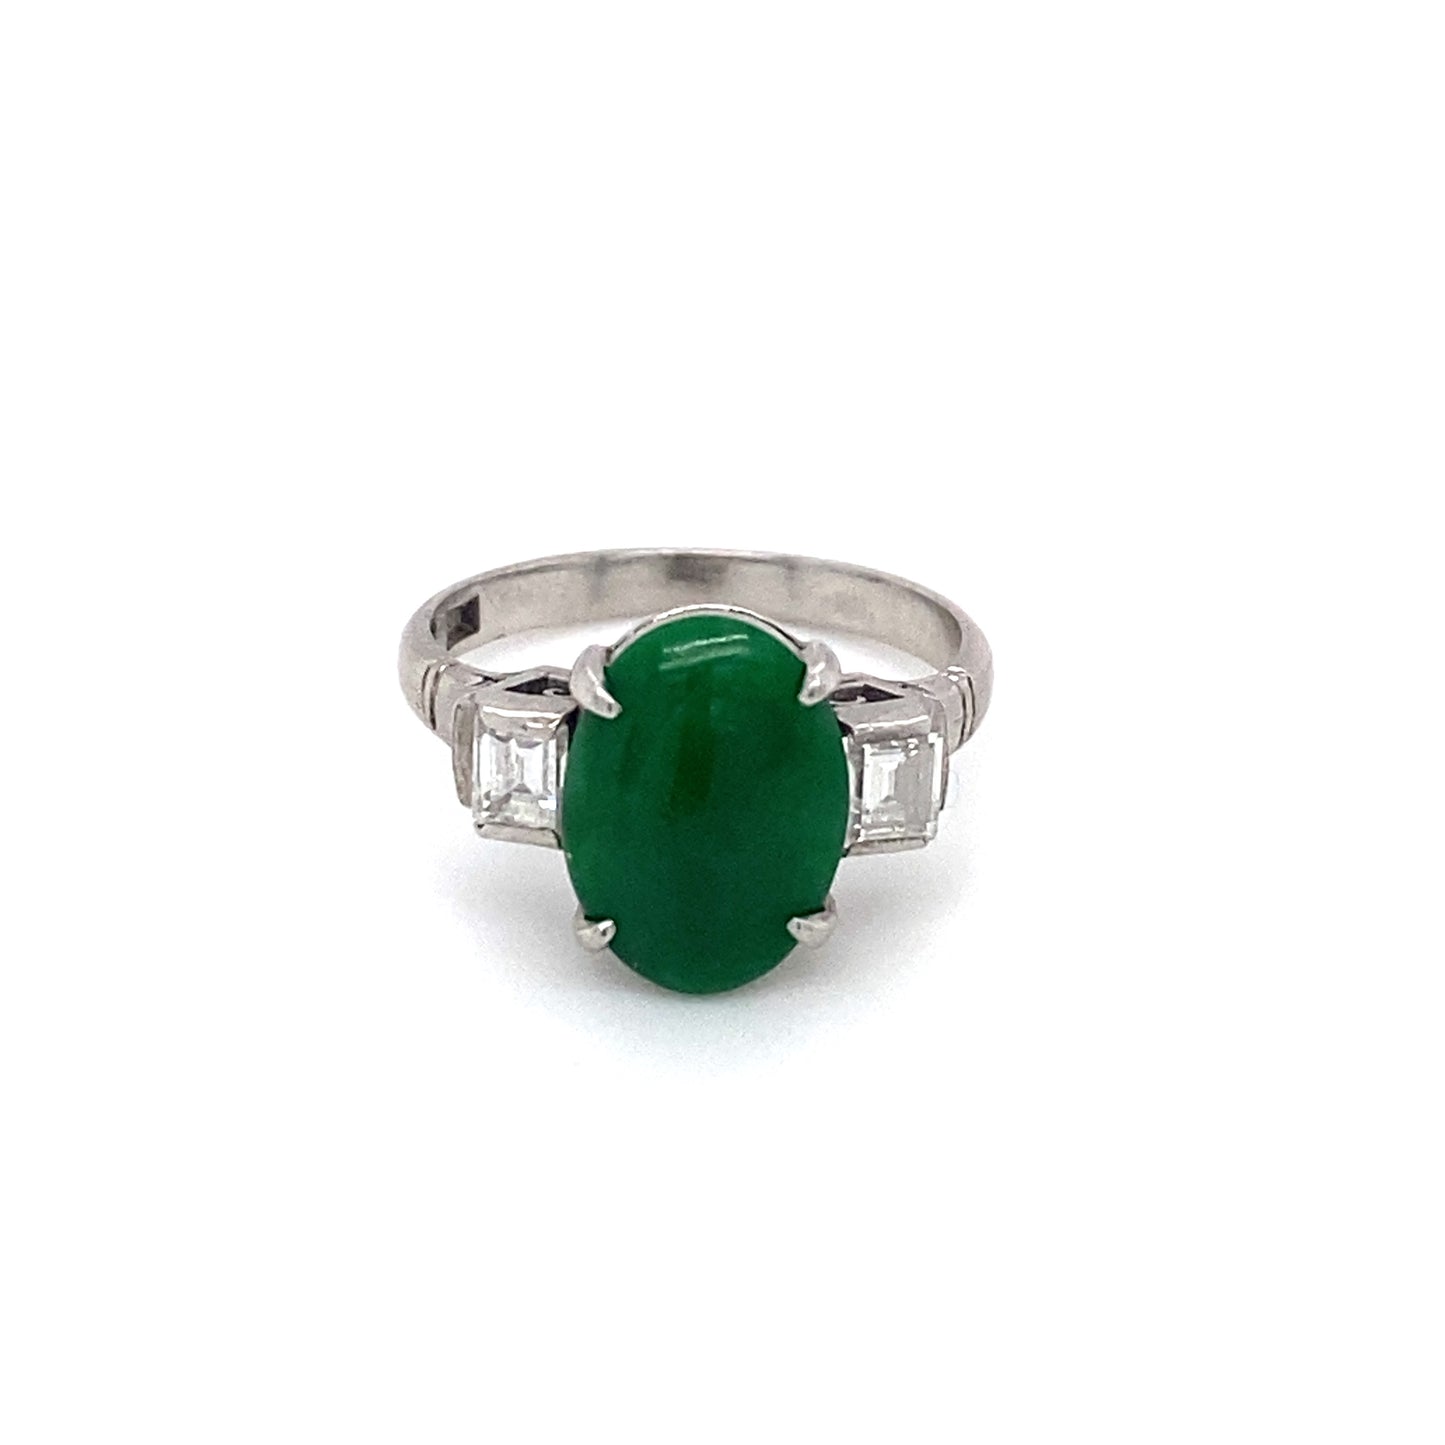 Circa 1930s Oval Green Jade and Diamond Three Stone Ring in Platinum